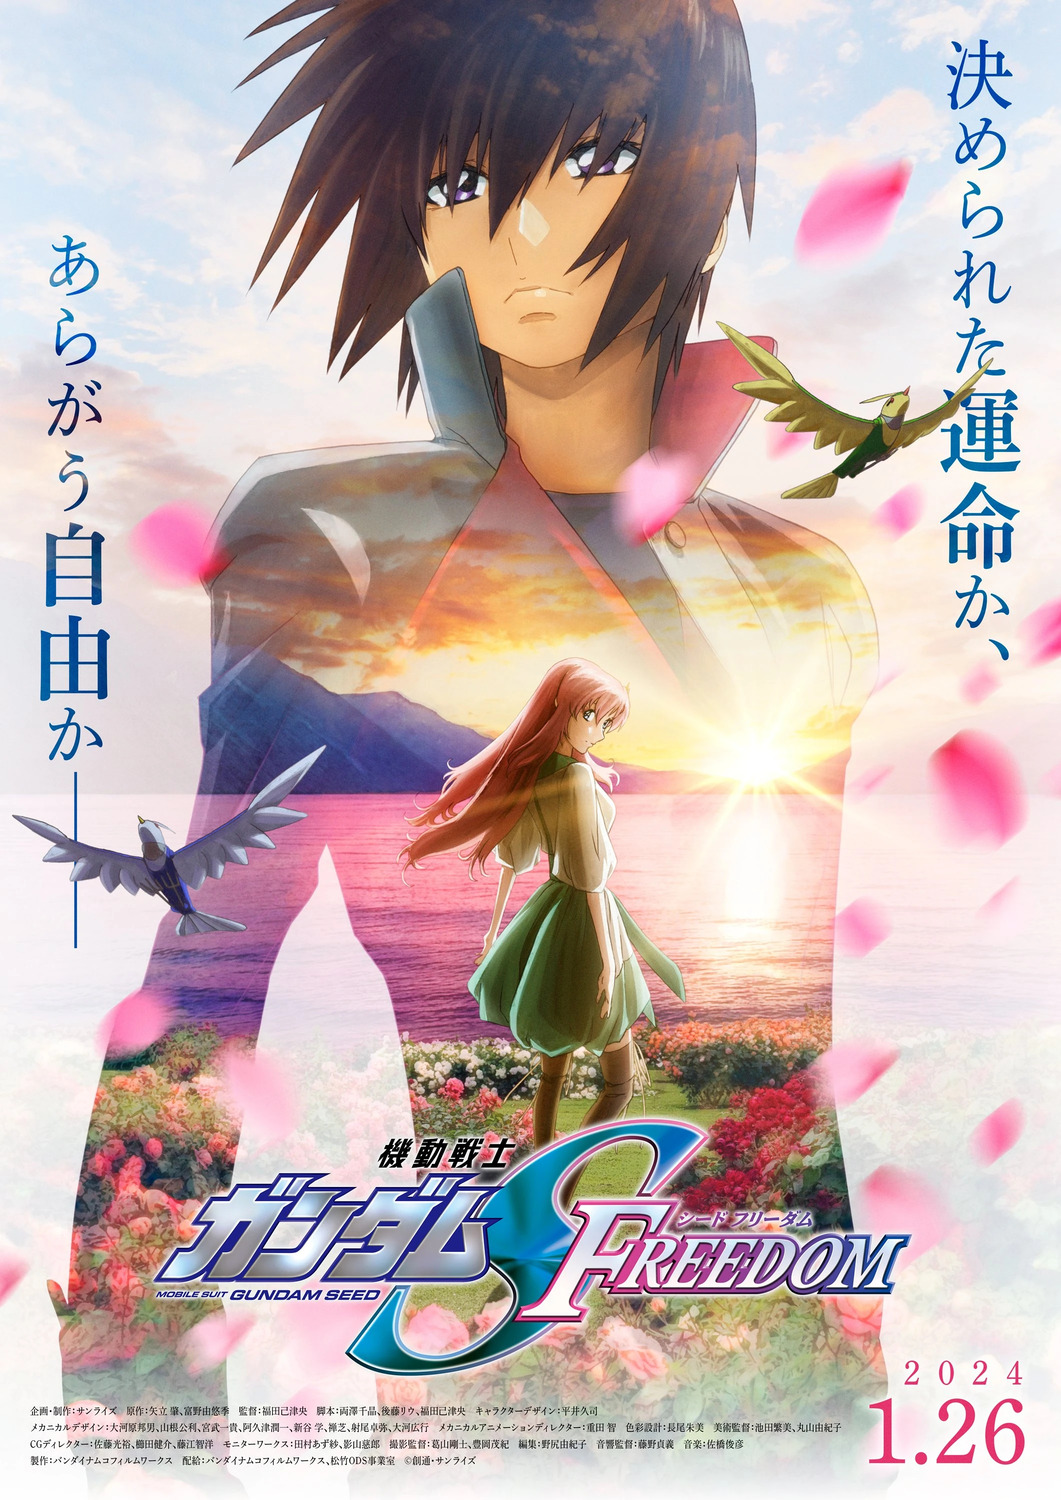 Extra Large Movie Poster Image for Kidô Senshi Gundam Seed Freedom 